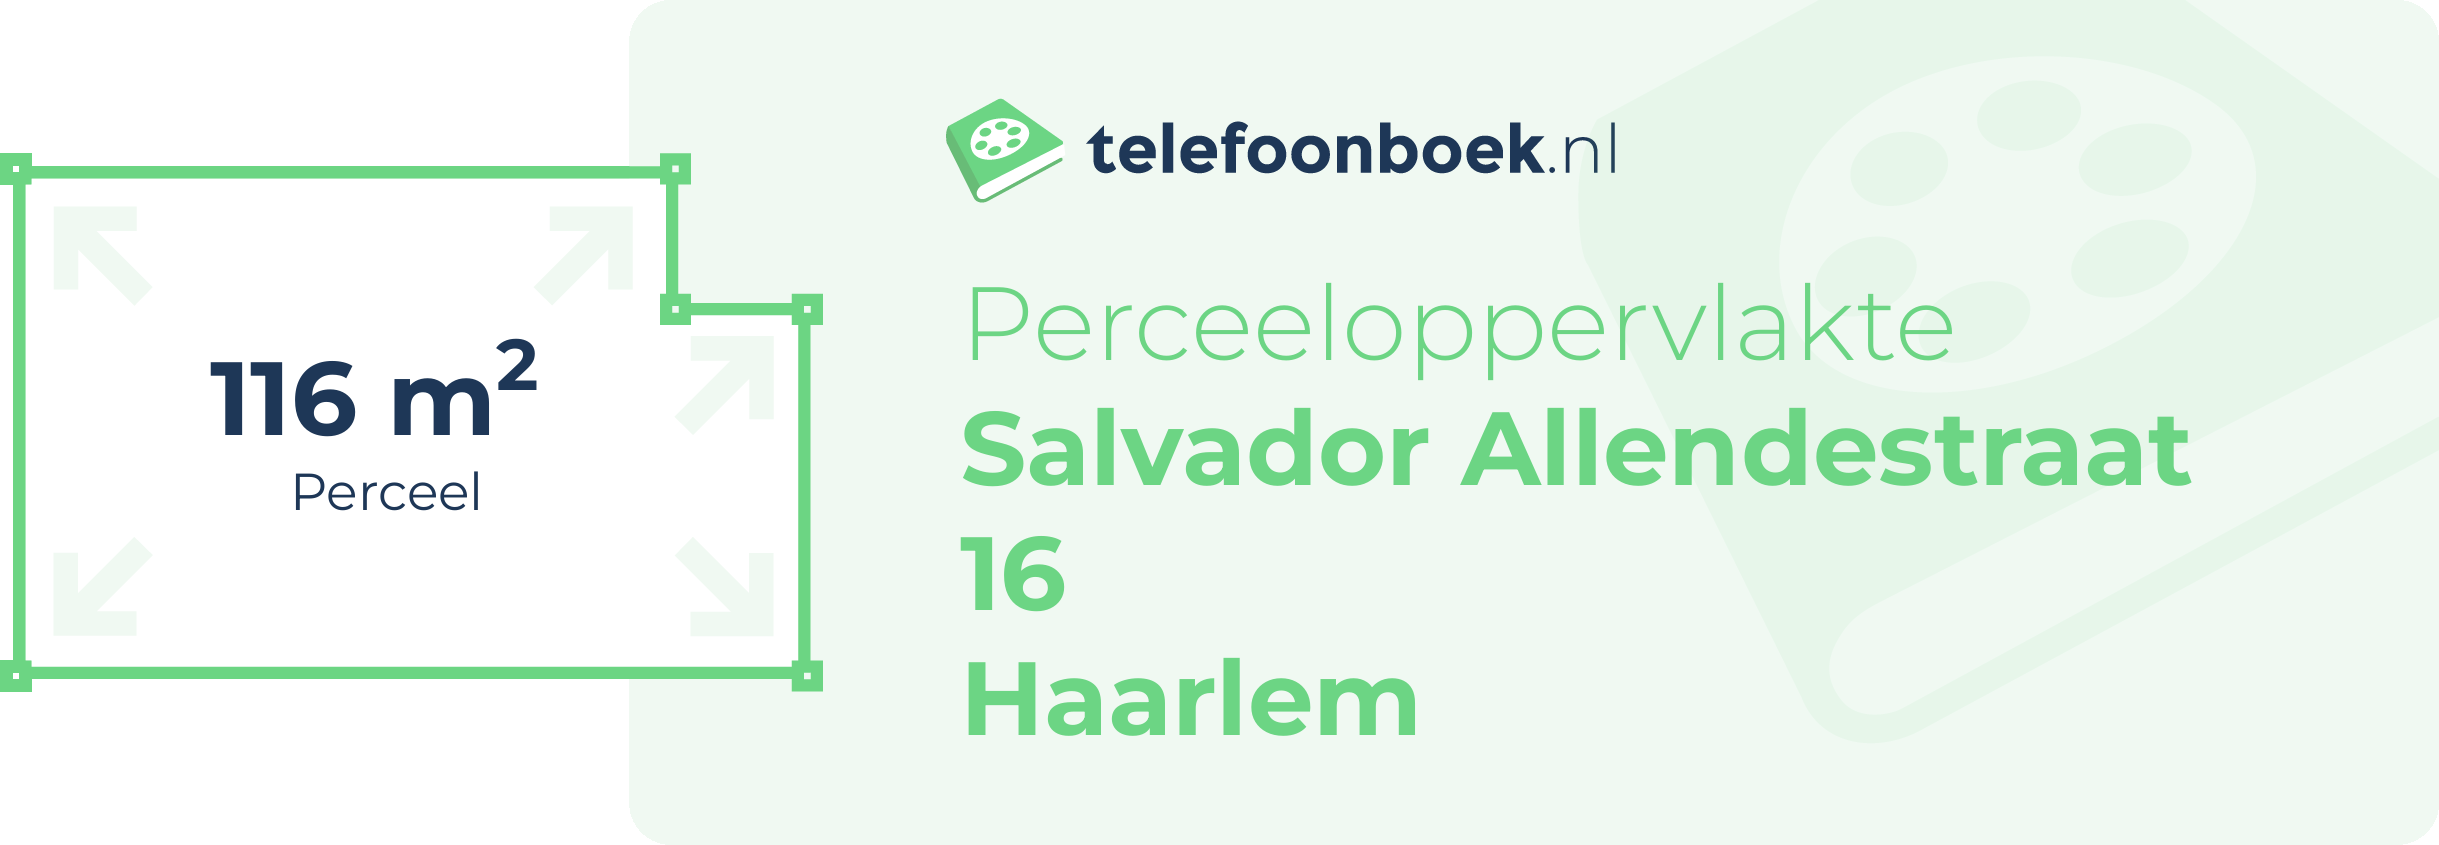 Perceeloppervlakte Salvador Allendestraat 16 Haarlem